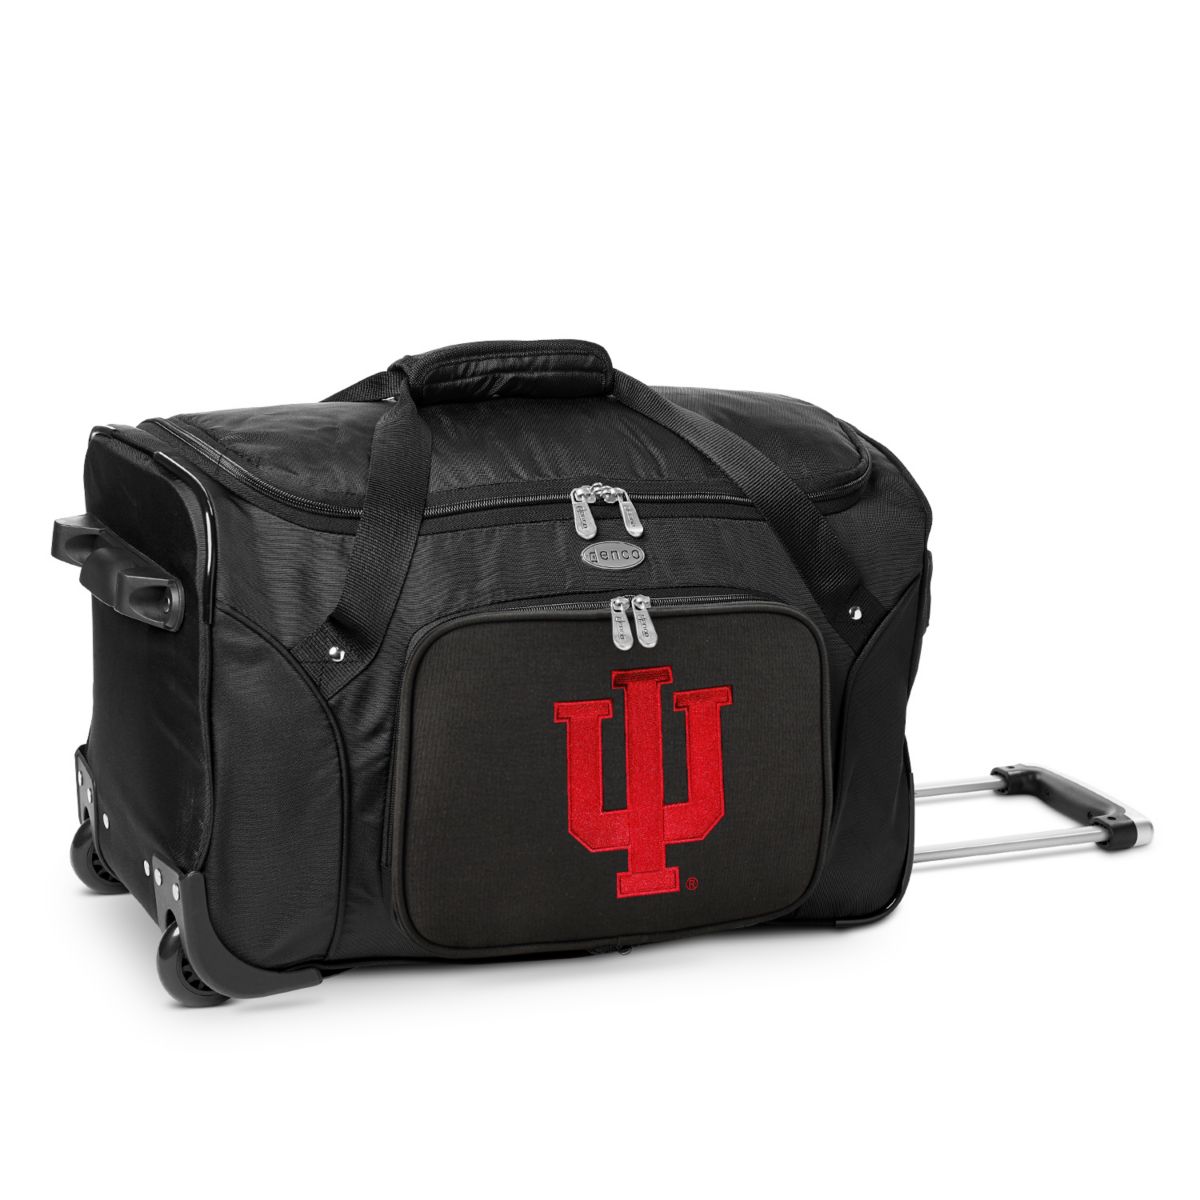 Спортивная сумка Denco Indiana Hoosiers на колесиках 22 дюйма Denco